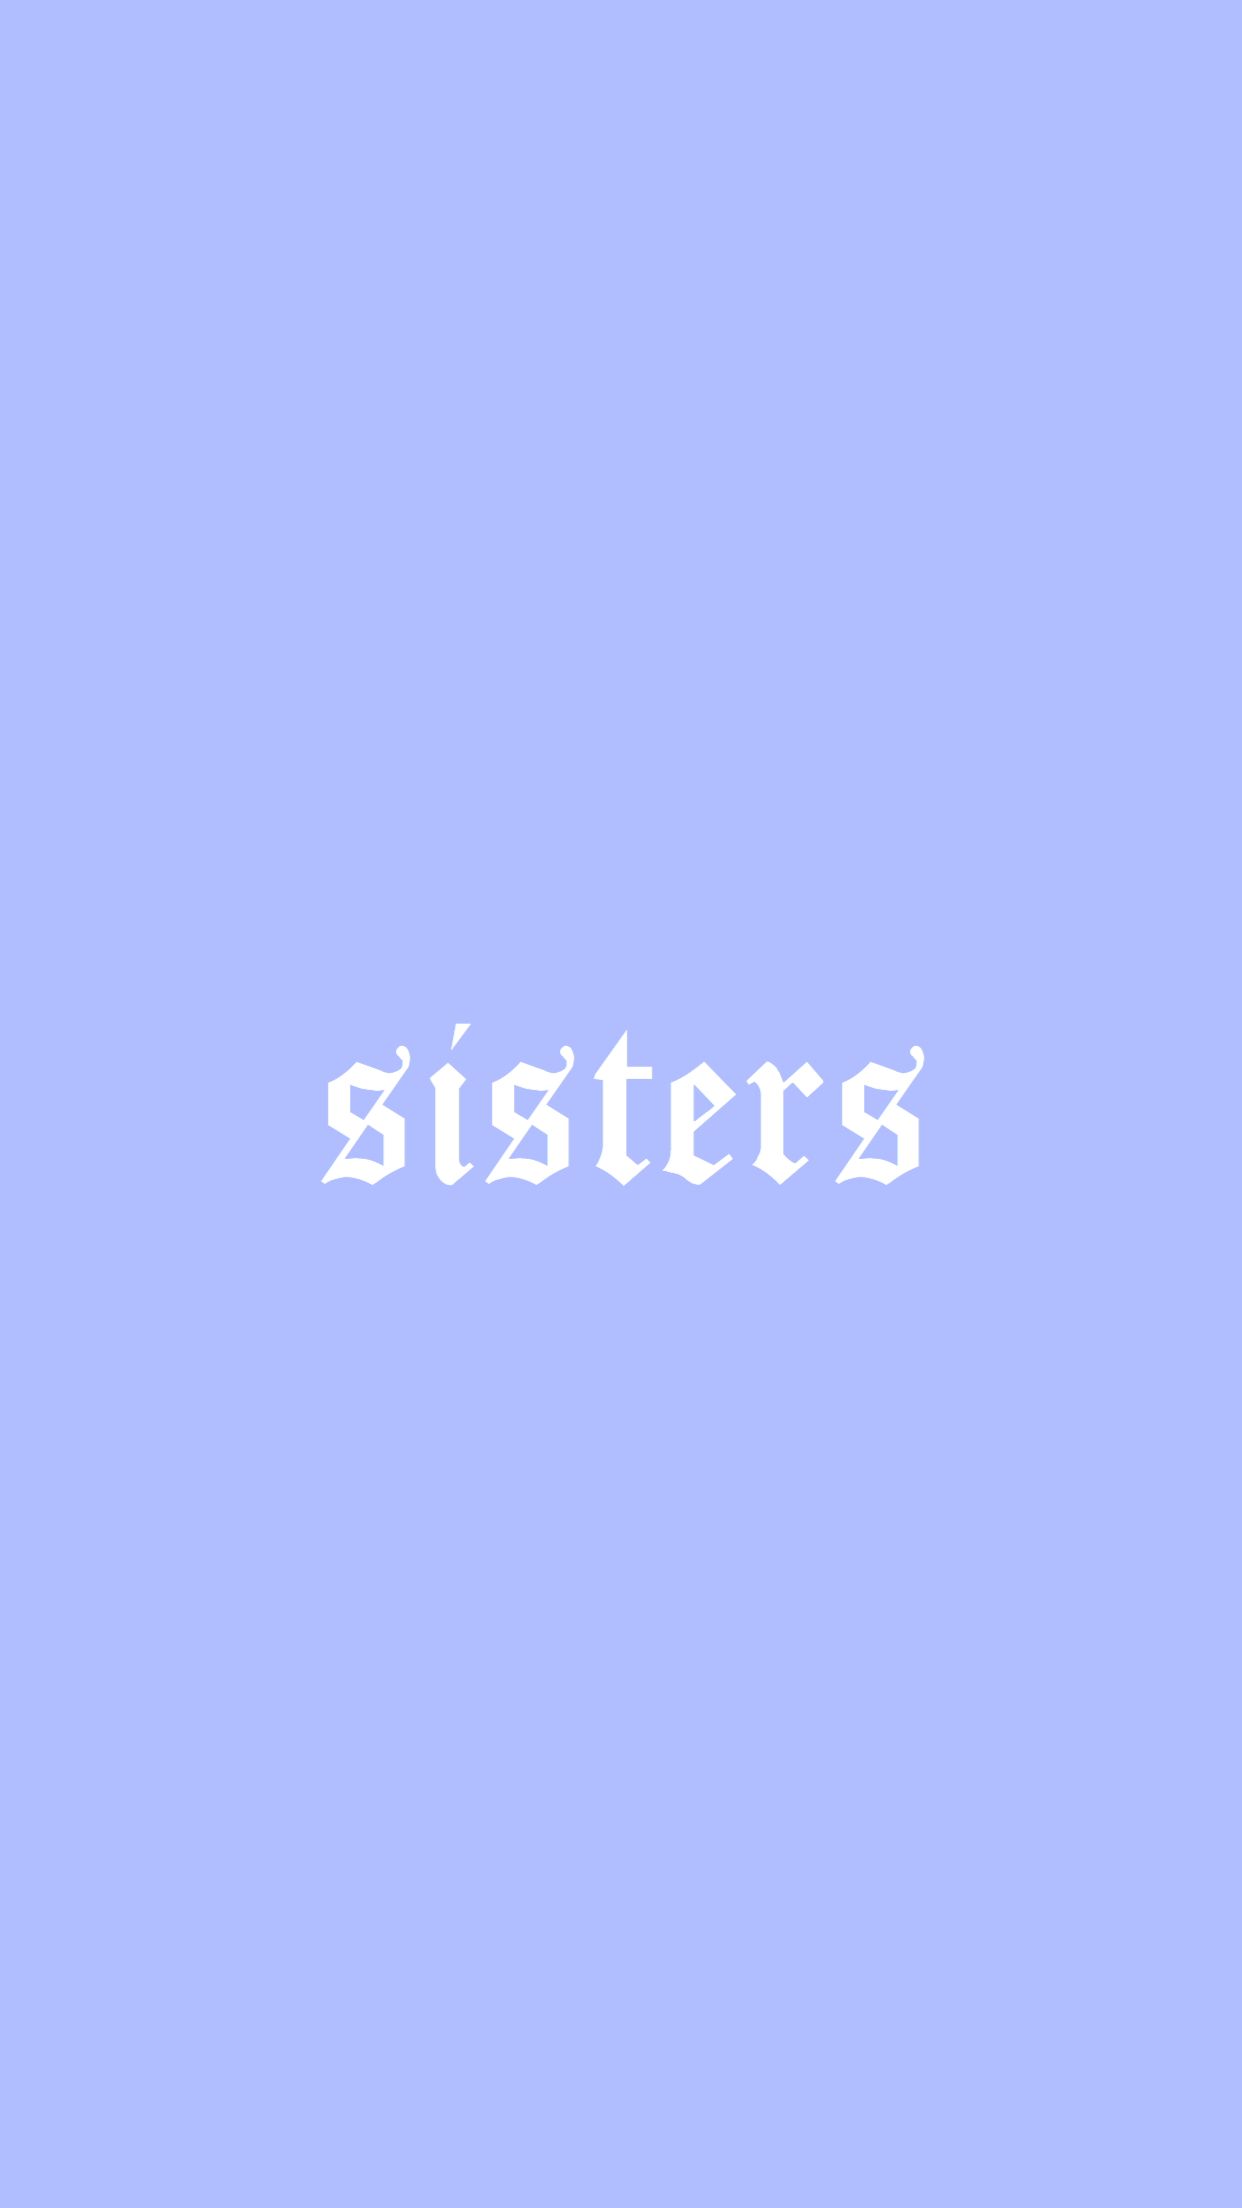 James Charles Lavender Sisters Wallpaper. Sister wallpaper, Wallpaper iphone summer, Cute girl wallpaper